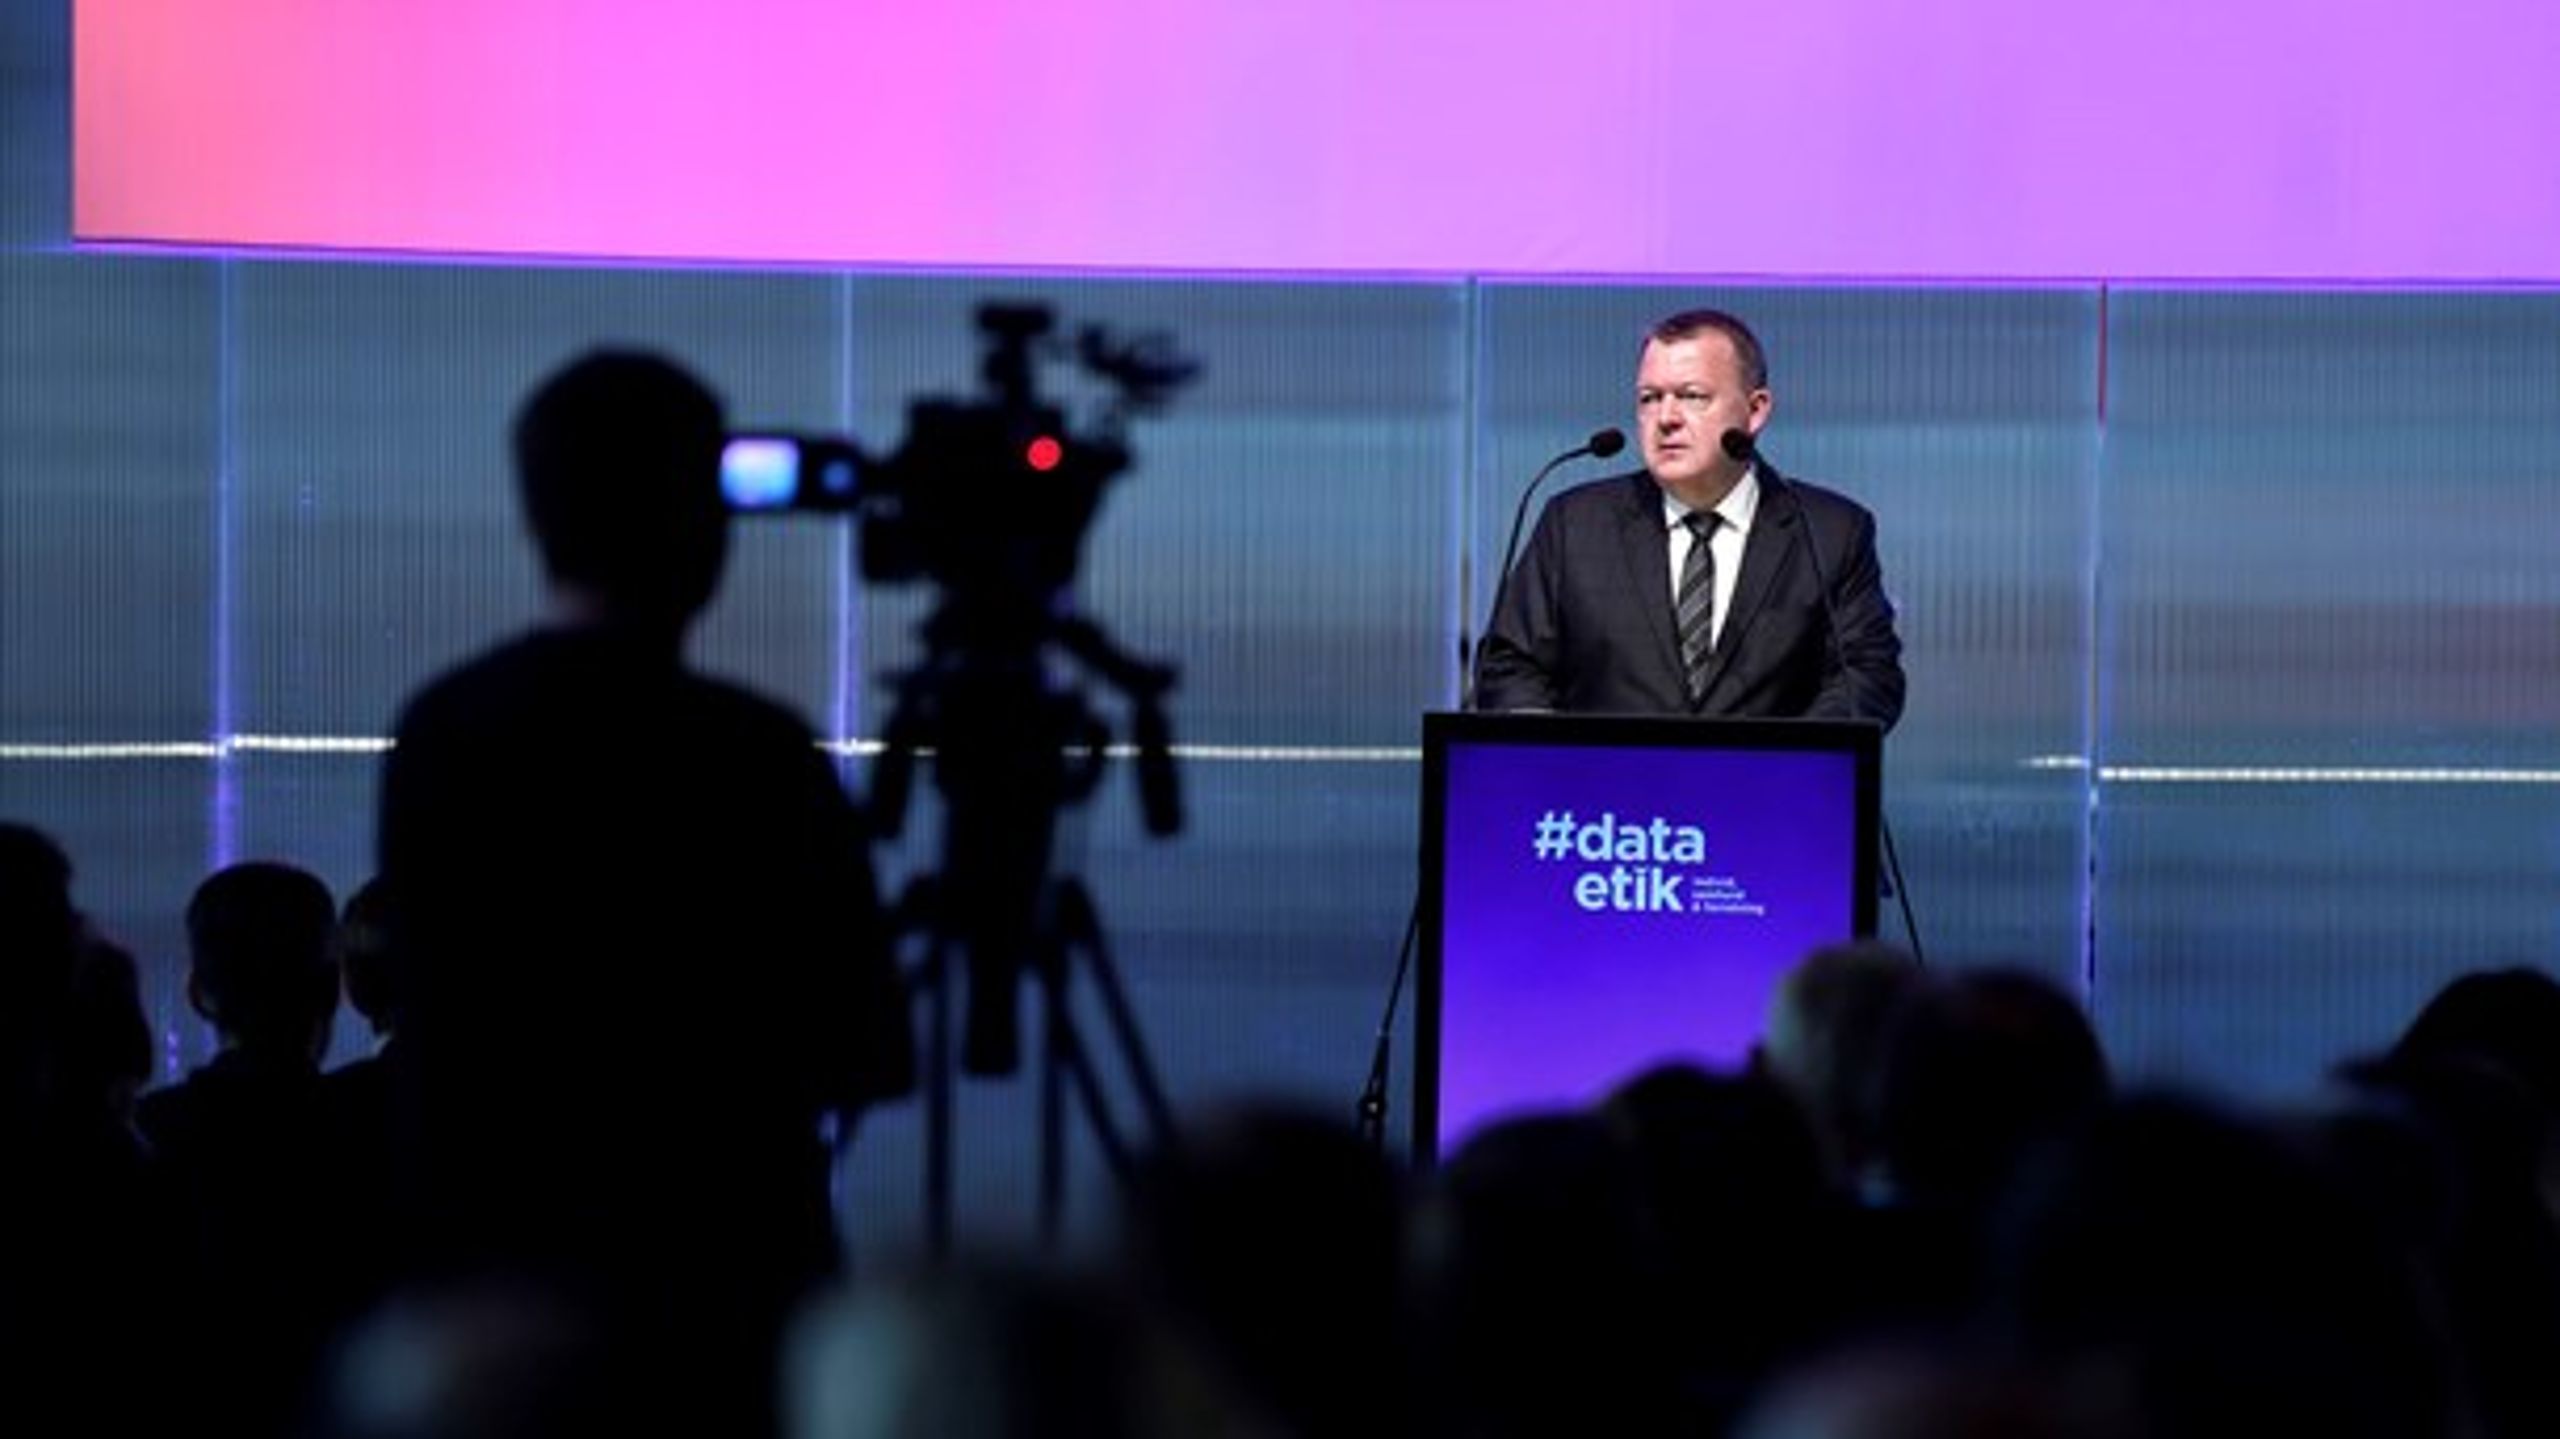 Statsminister Lars Løkke Rasmussen talte ved Forsikring &amp; Pensions årsmøde og 100 års jubilæum.